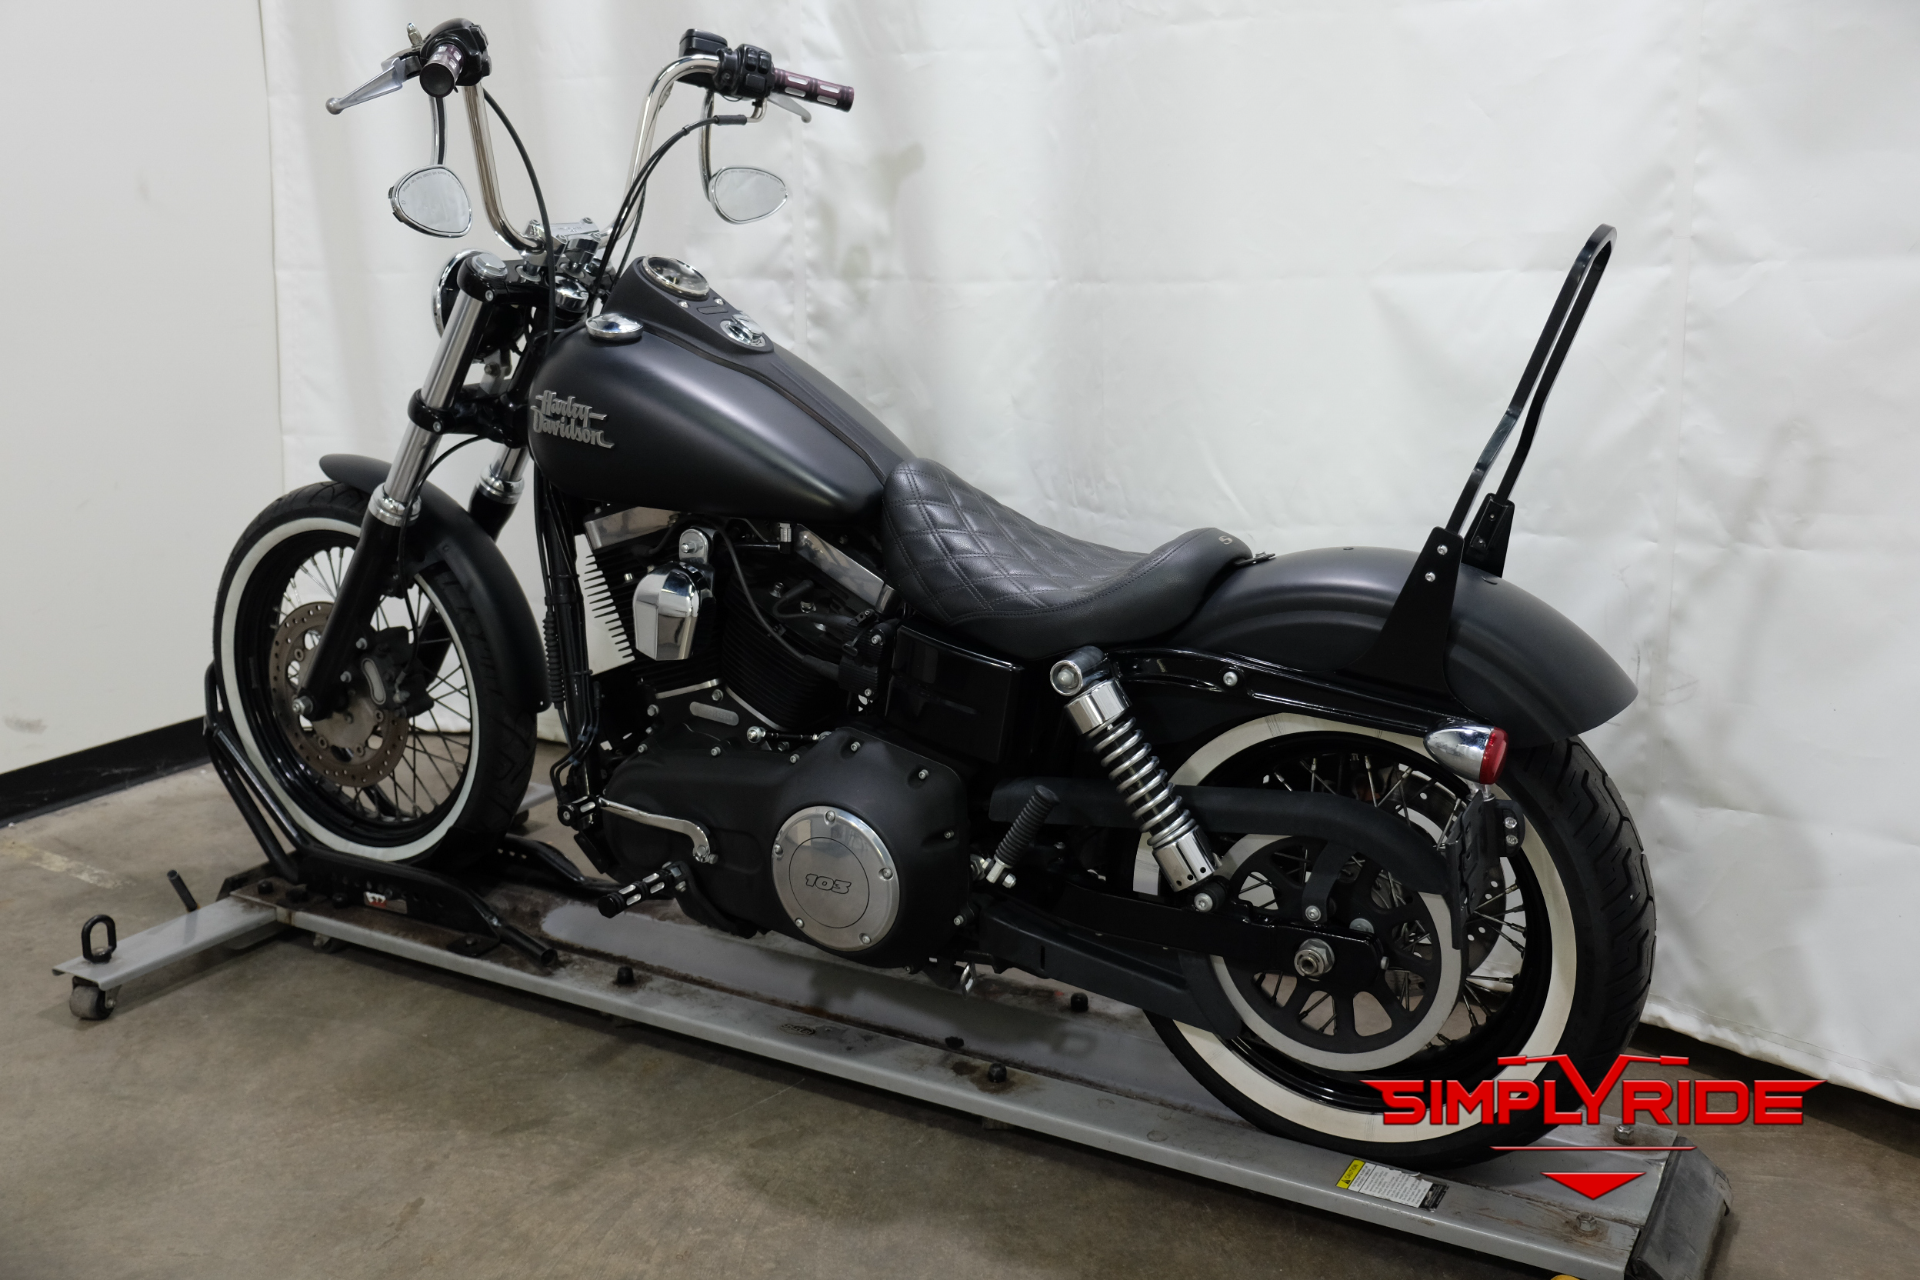 2015 Harley-Davidson Street Bob® in Eden Prairie, Minnesota - Photo 6